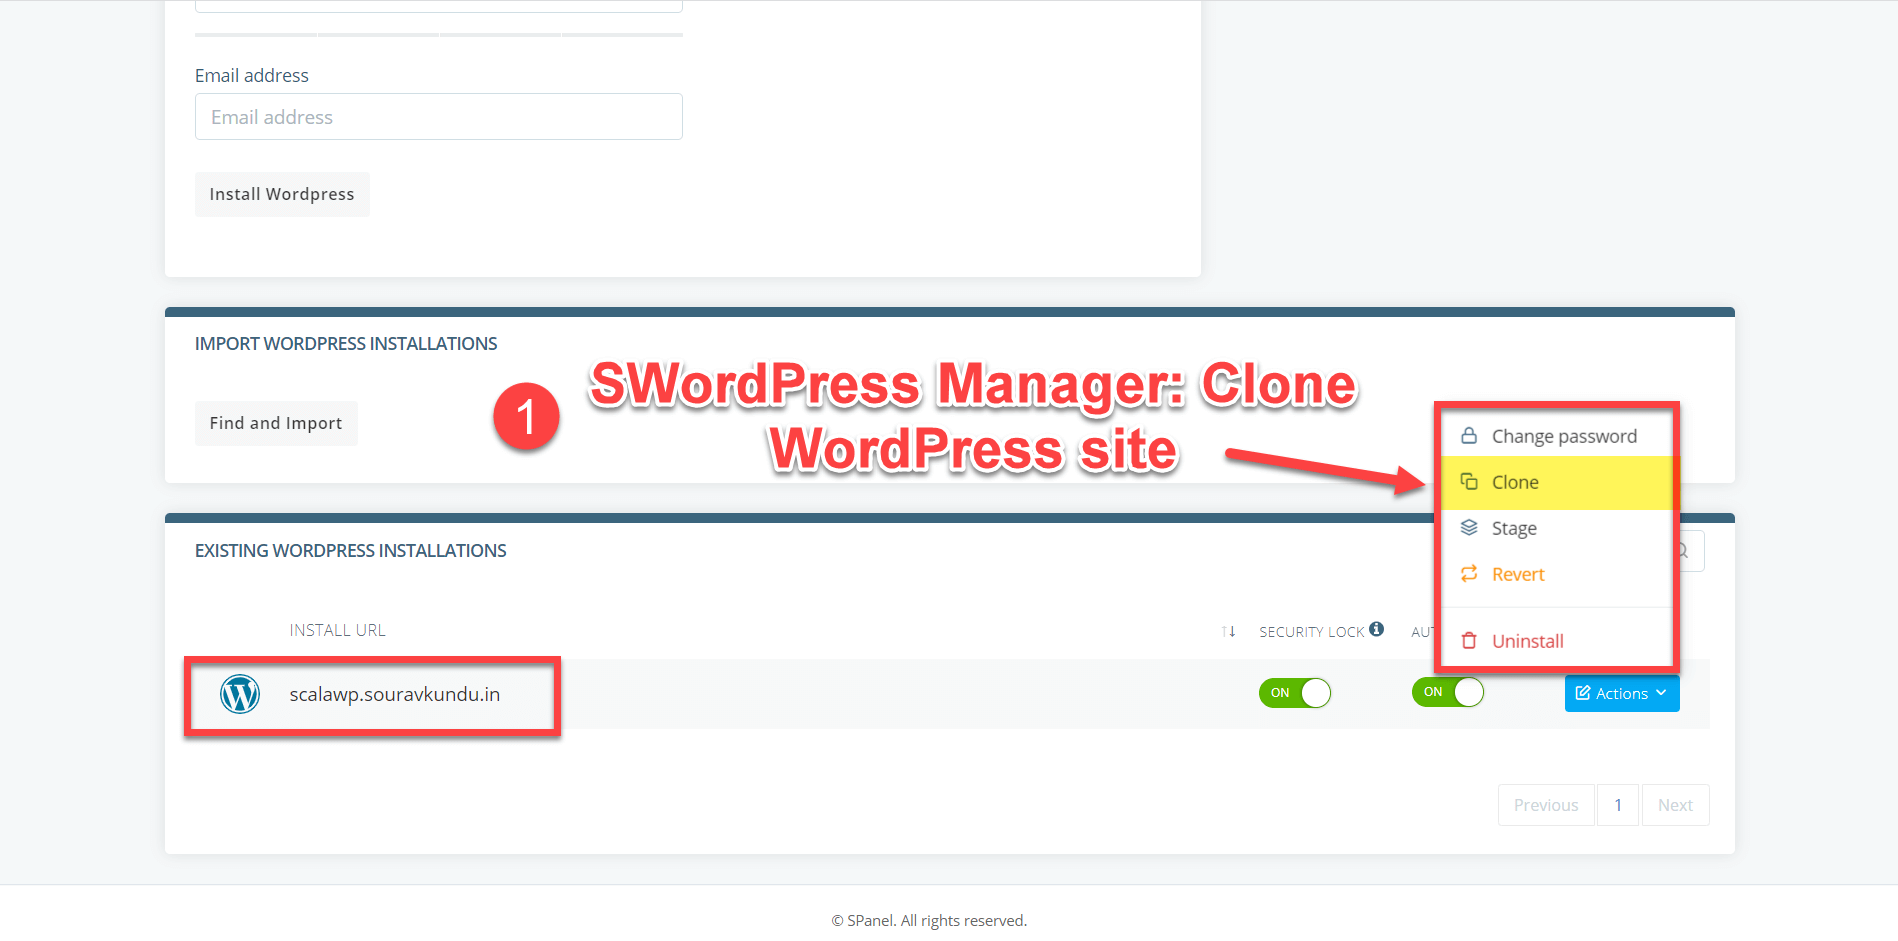 scala swordpress manager options - clone wordpress site 1